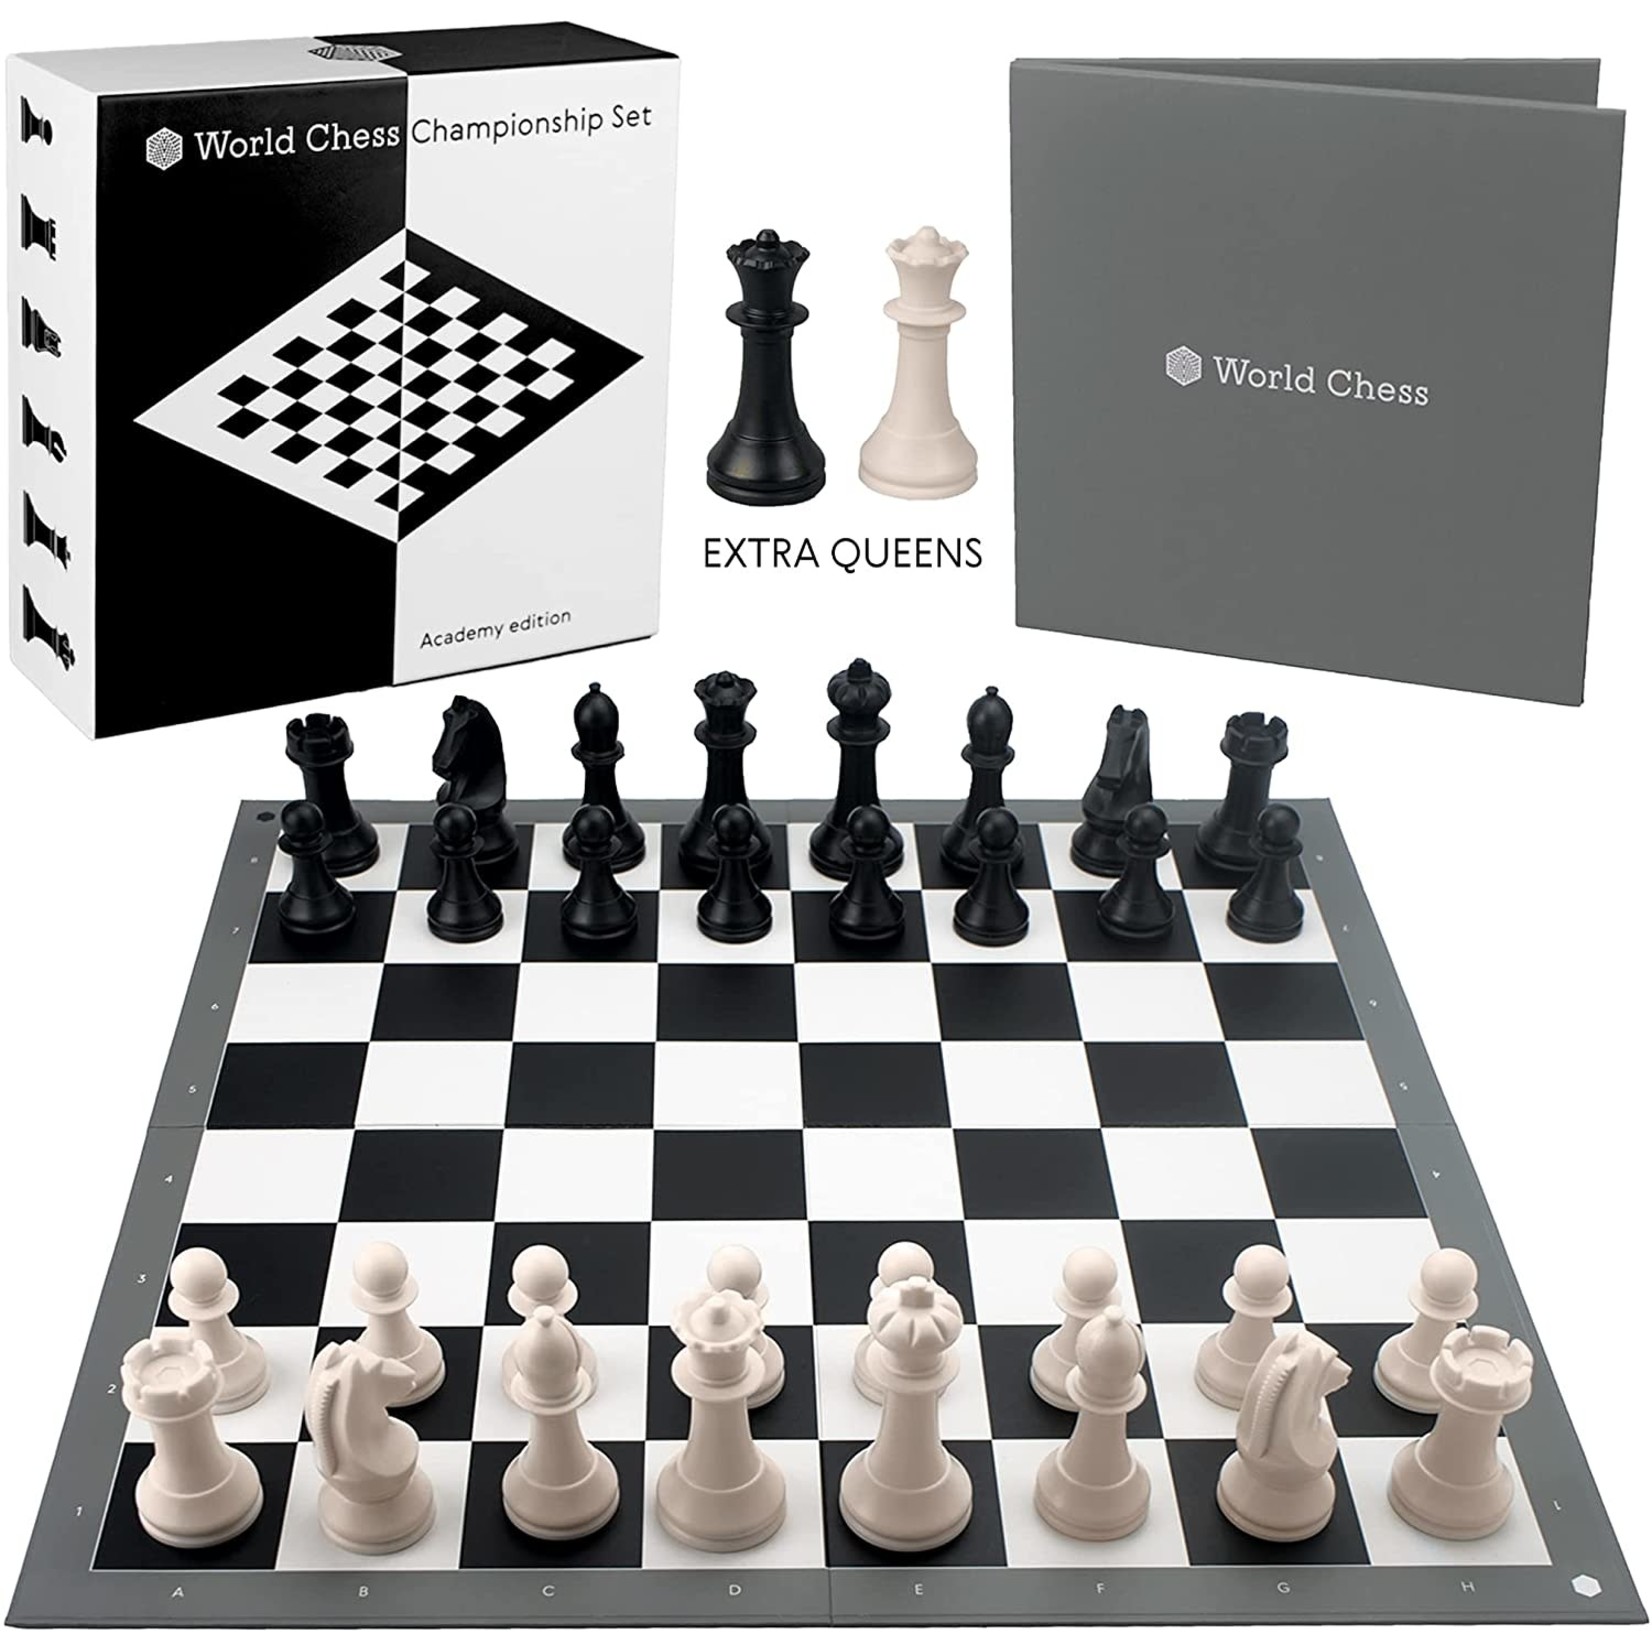 World Chess Chess Set: World Chess Championship Design (Academy Edition)